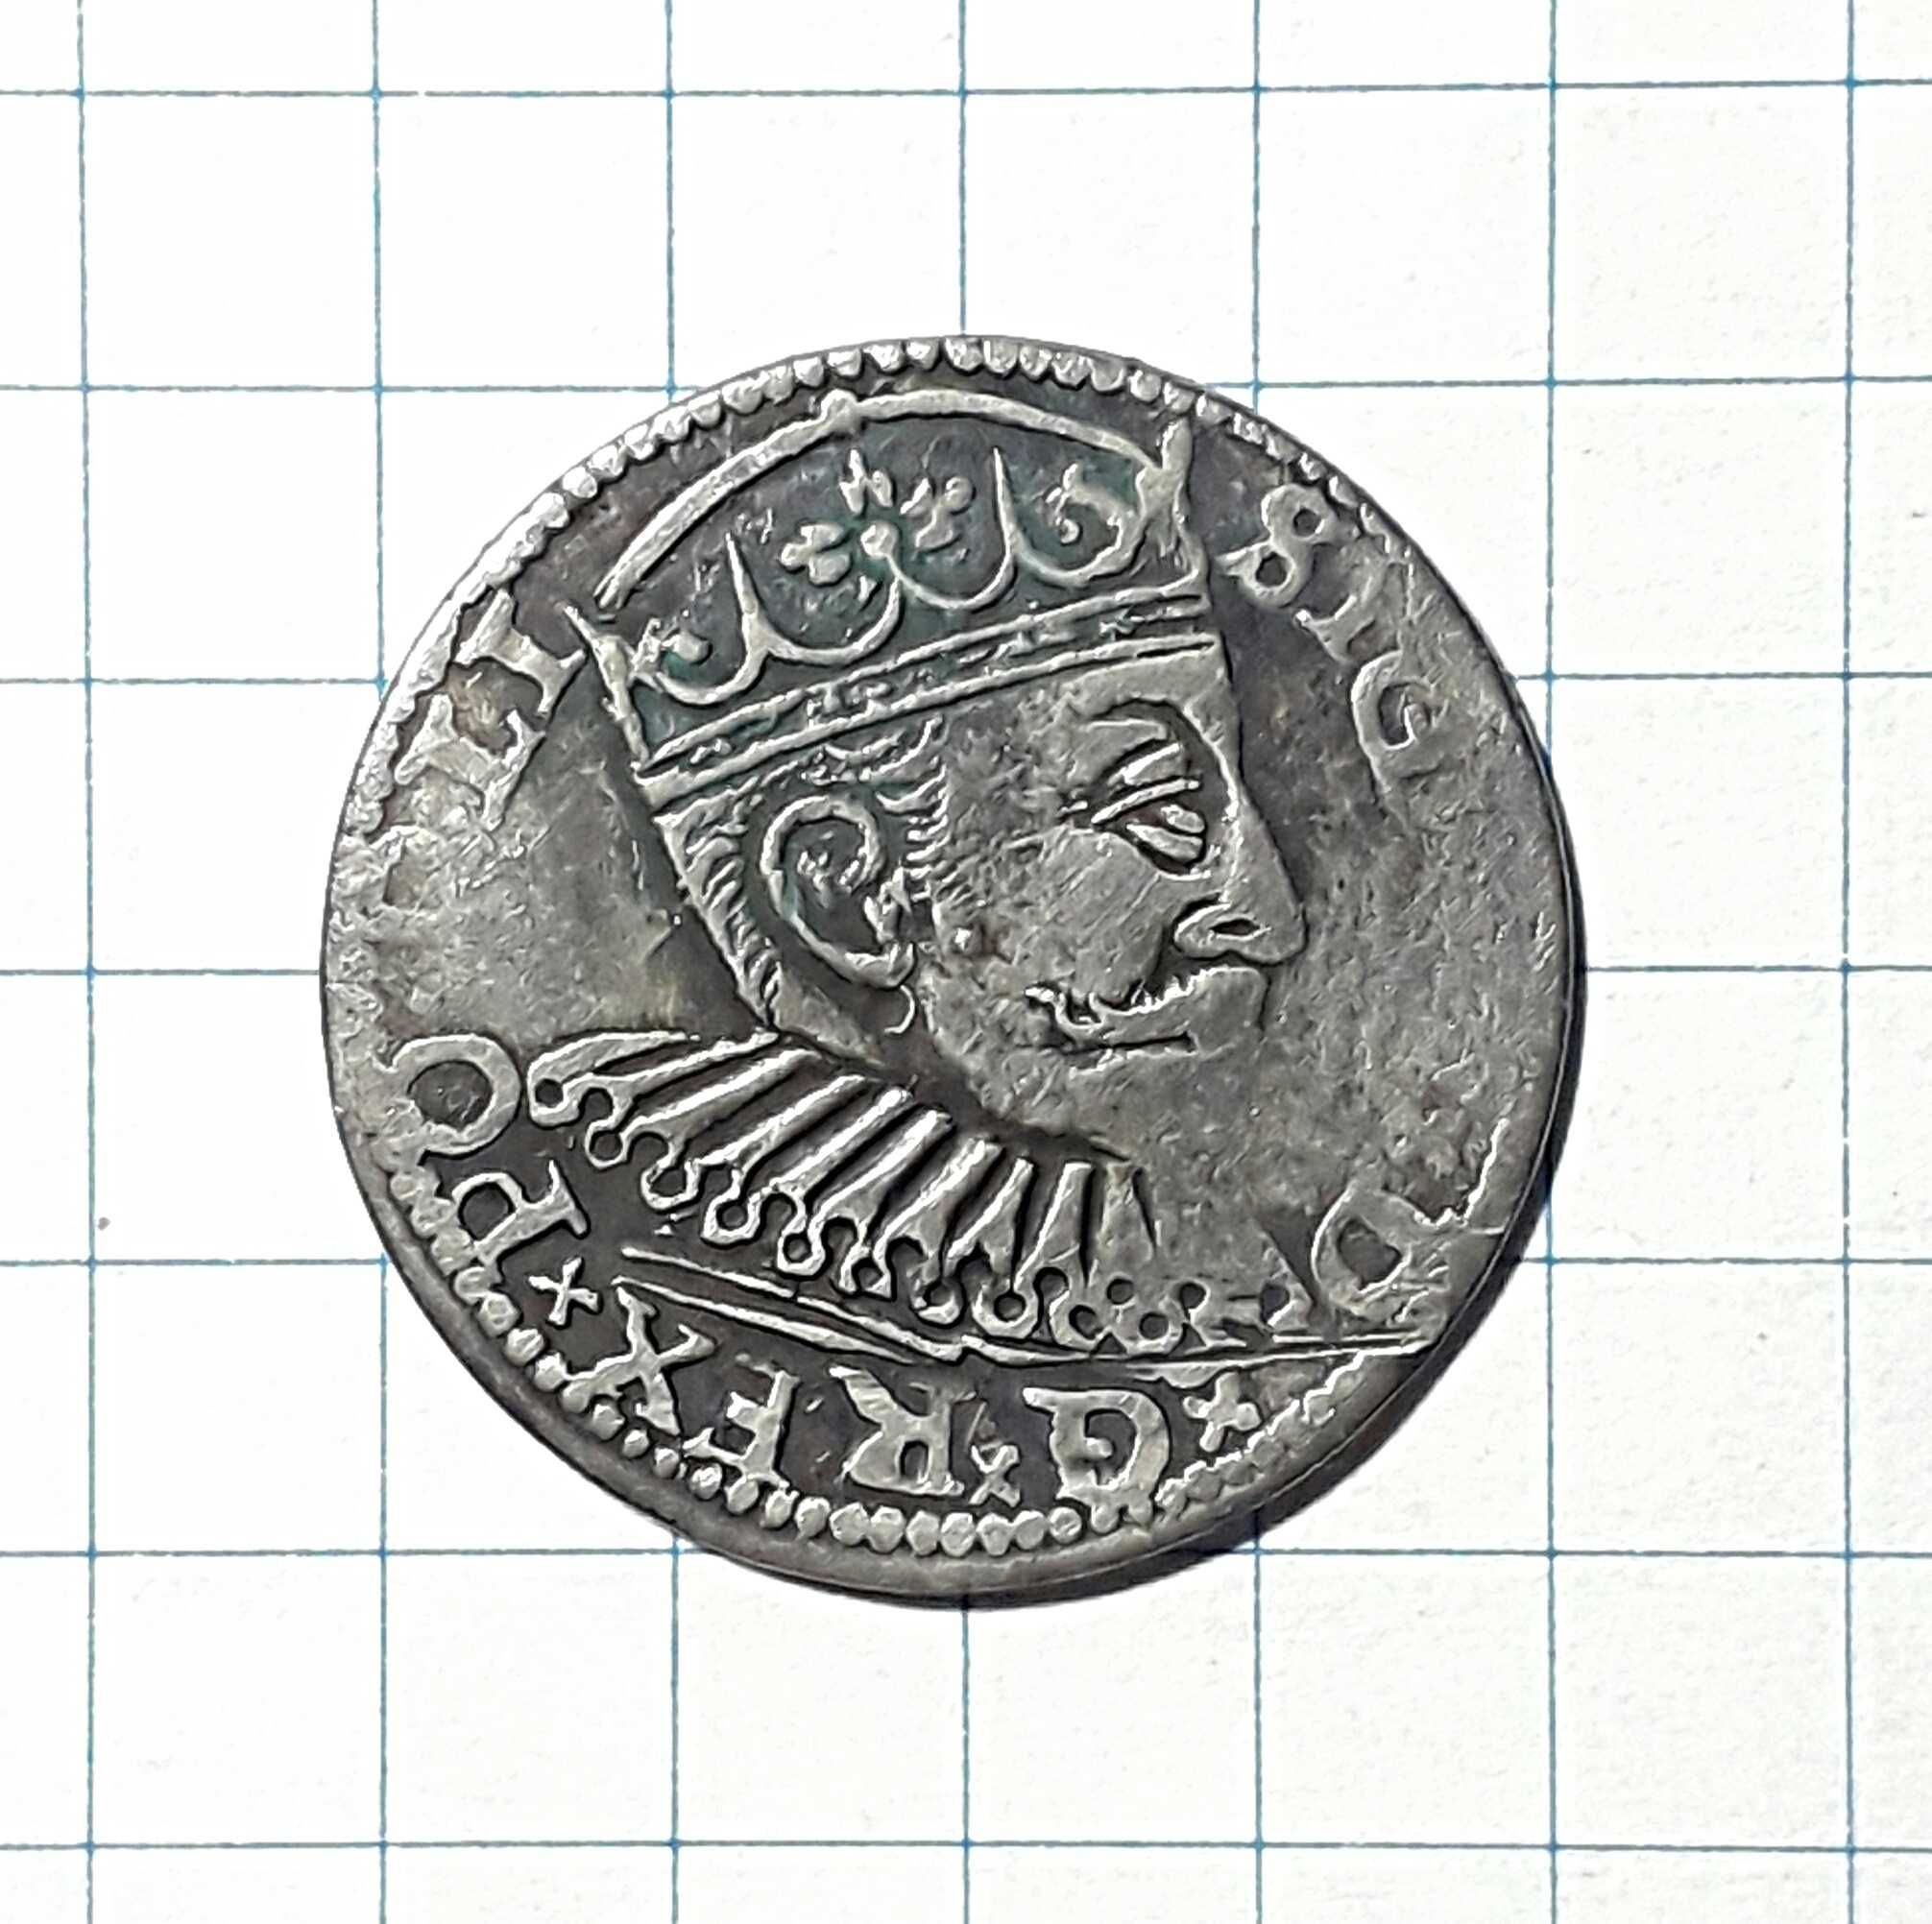 Монета 1597 года.Серебро.